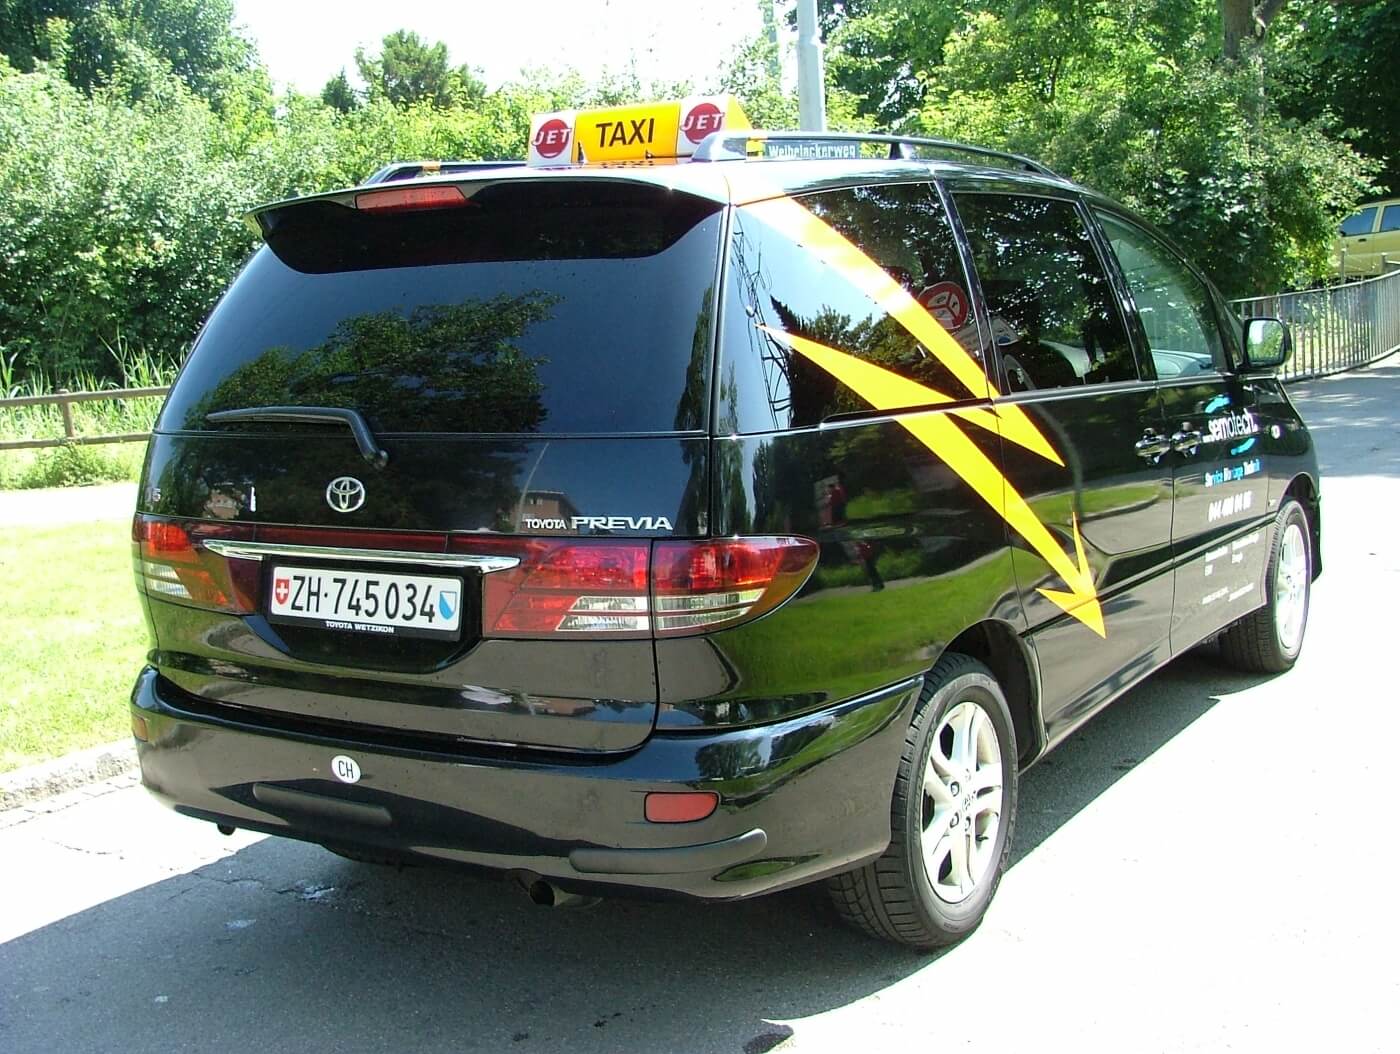 Jet Taxi Bülach – 044 514 55 55